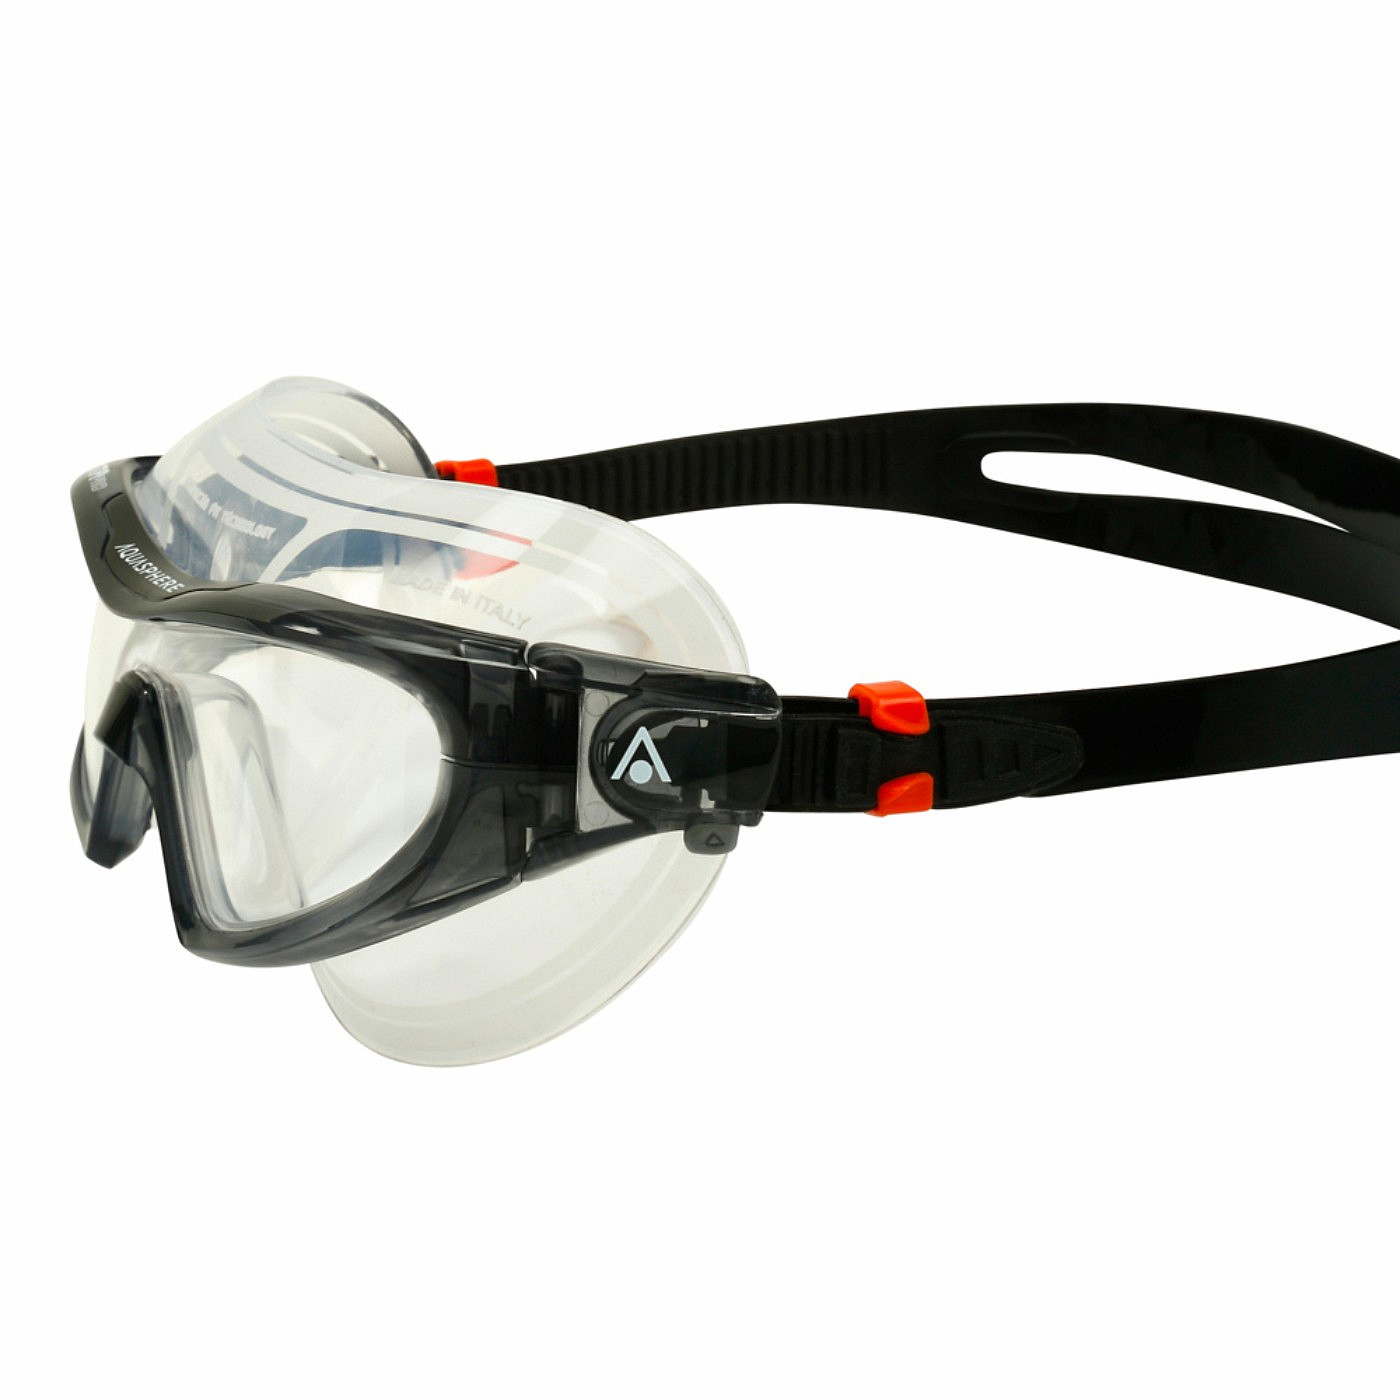 Aqua Sphere Swimming Goggles Vista Pro Clear & Dark Lens Ladies Mens Adults 2020 